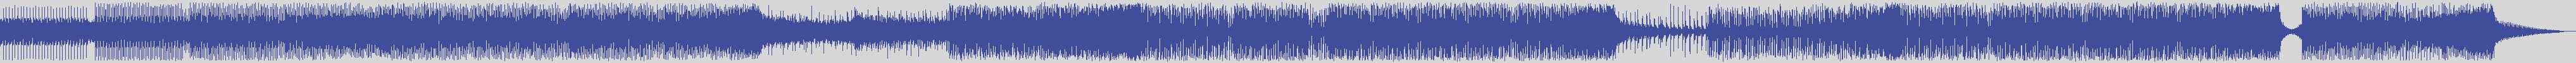 atomic_recordings [AR005] Dyno F. - Sky Drops [Original Mix] audio wave form